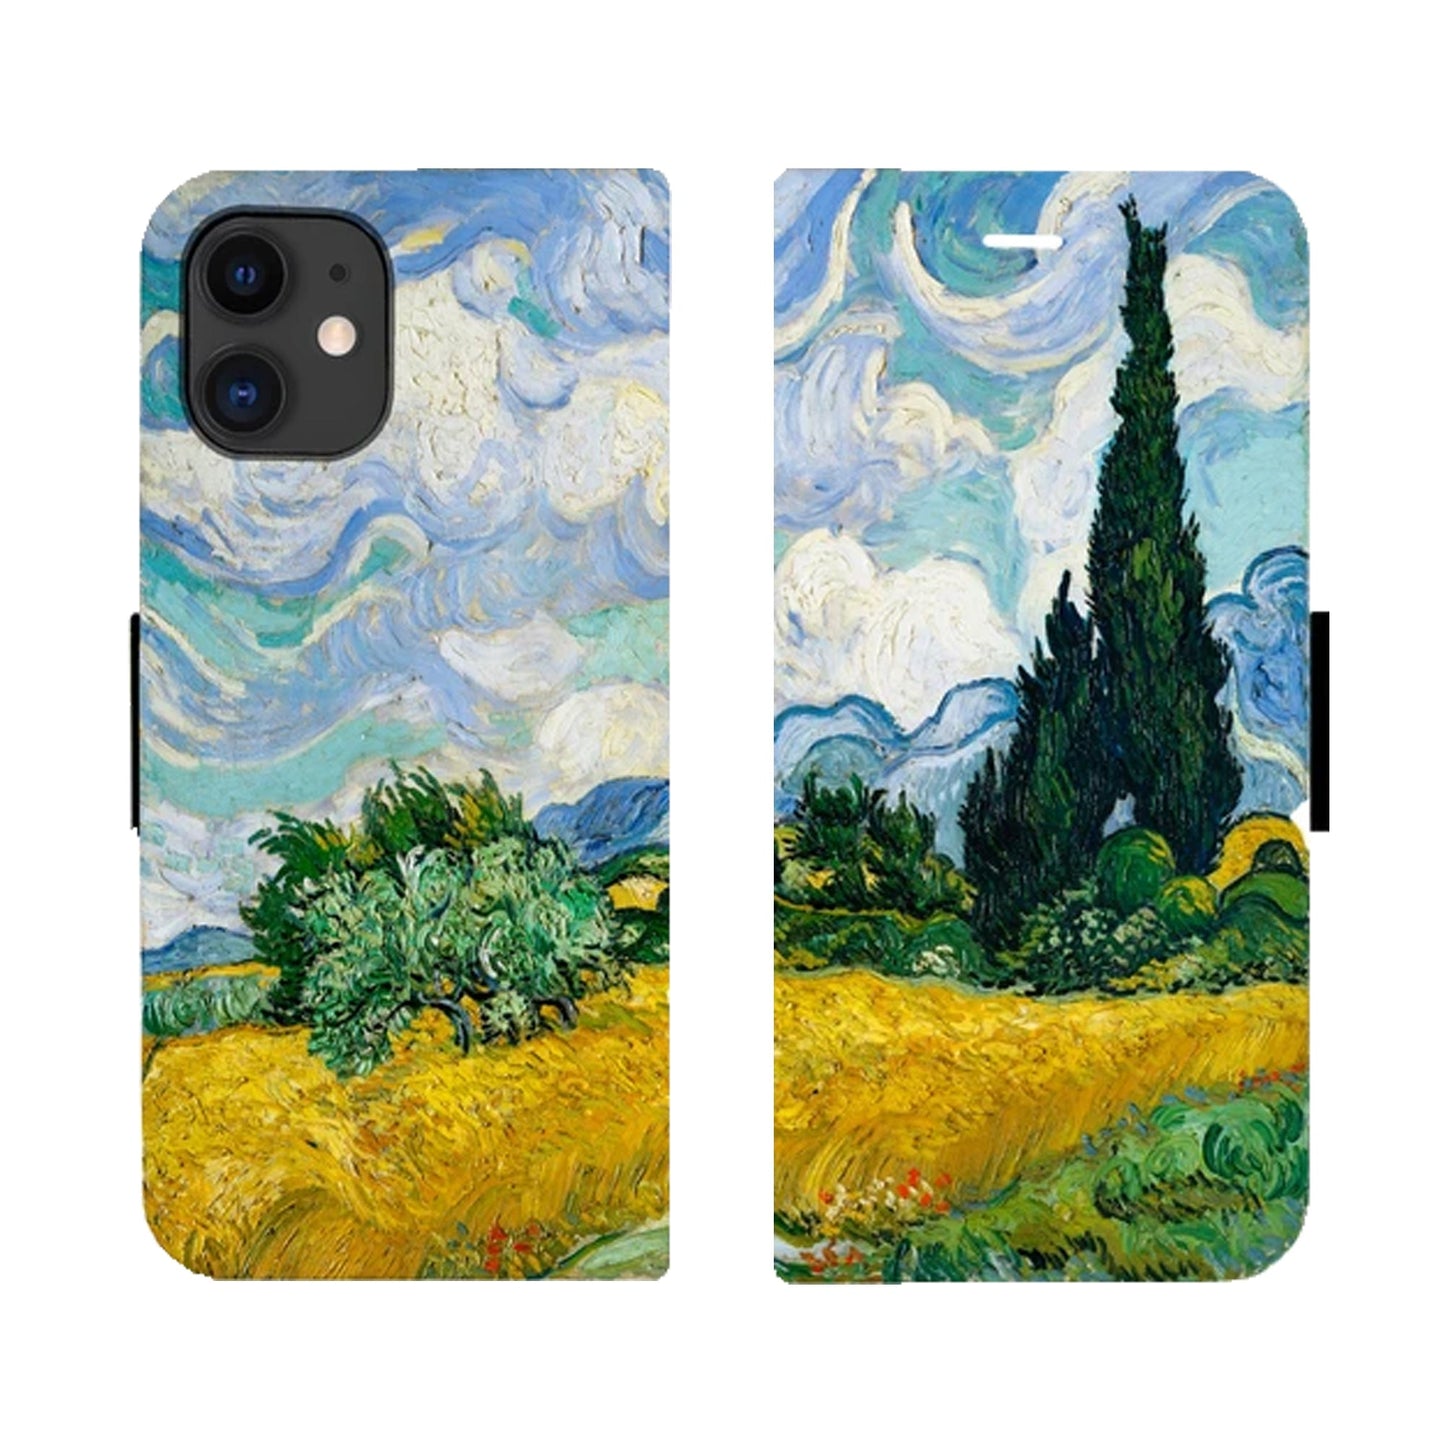 Van Gogh - Wheat Field Victor Case for iPhone 12 Mini